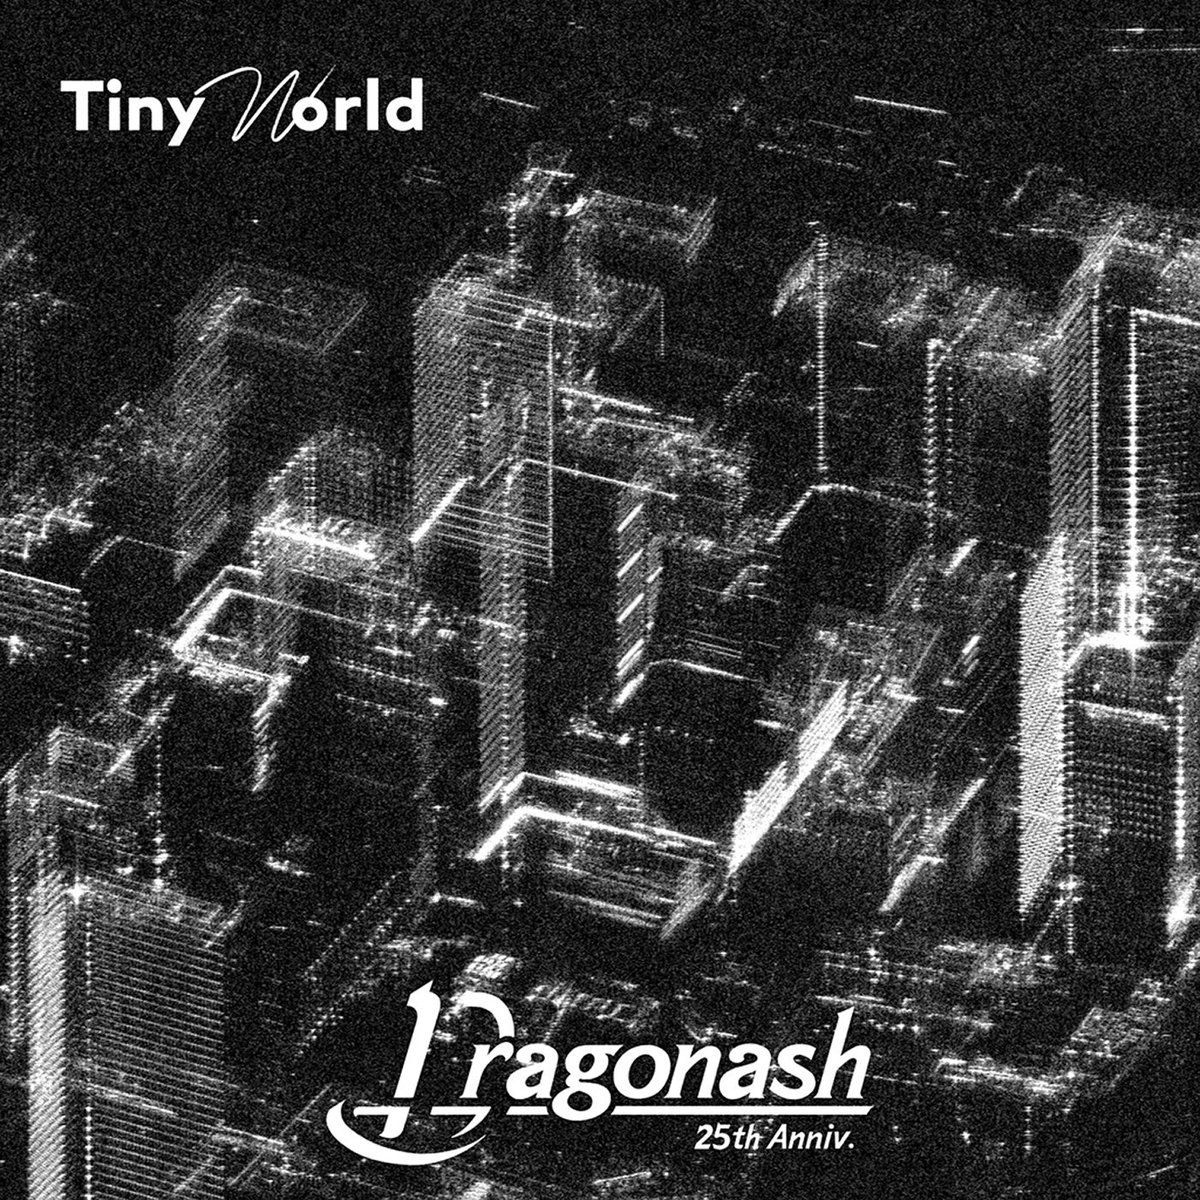 『Dragon Ash - Tiny World』収録の『Tiny World』ジャケット